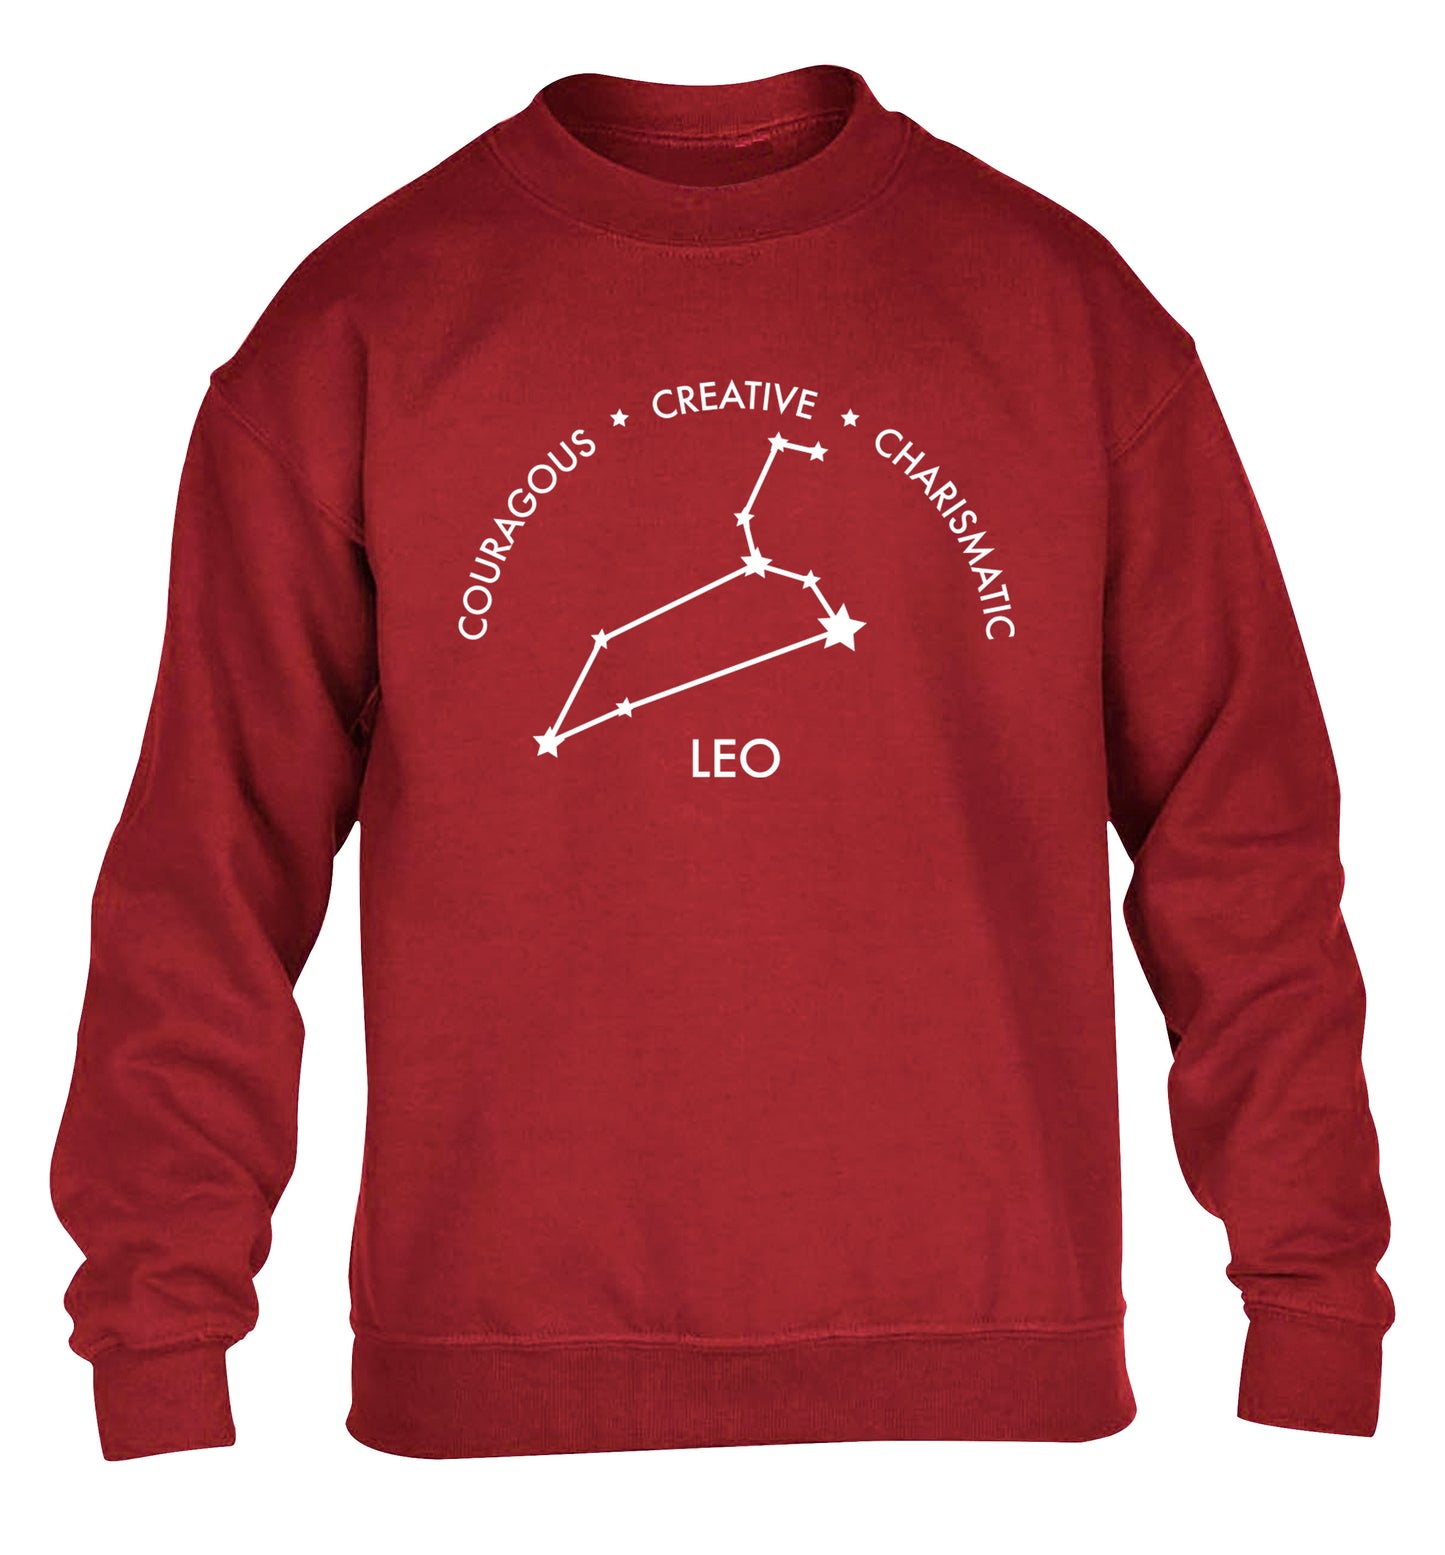 Leo - Courageous | Creative | Charismatic children's grey sweater 12-13 Years